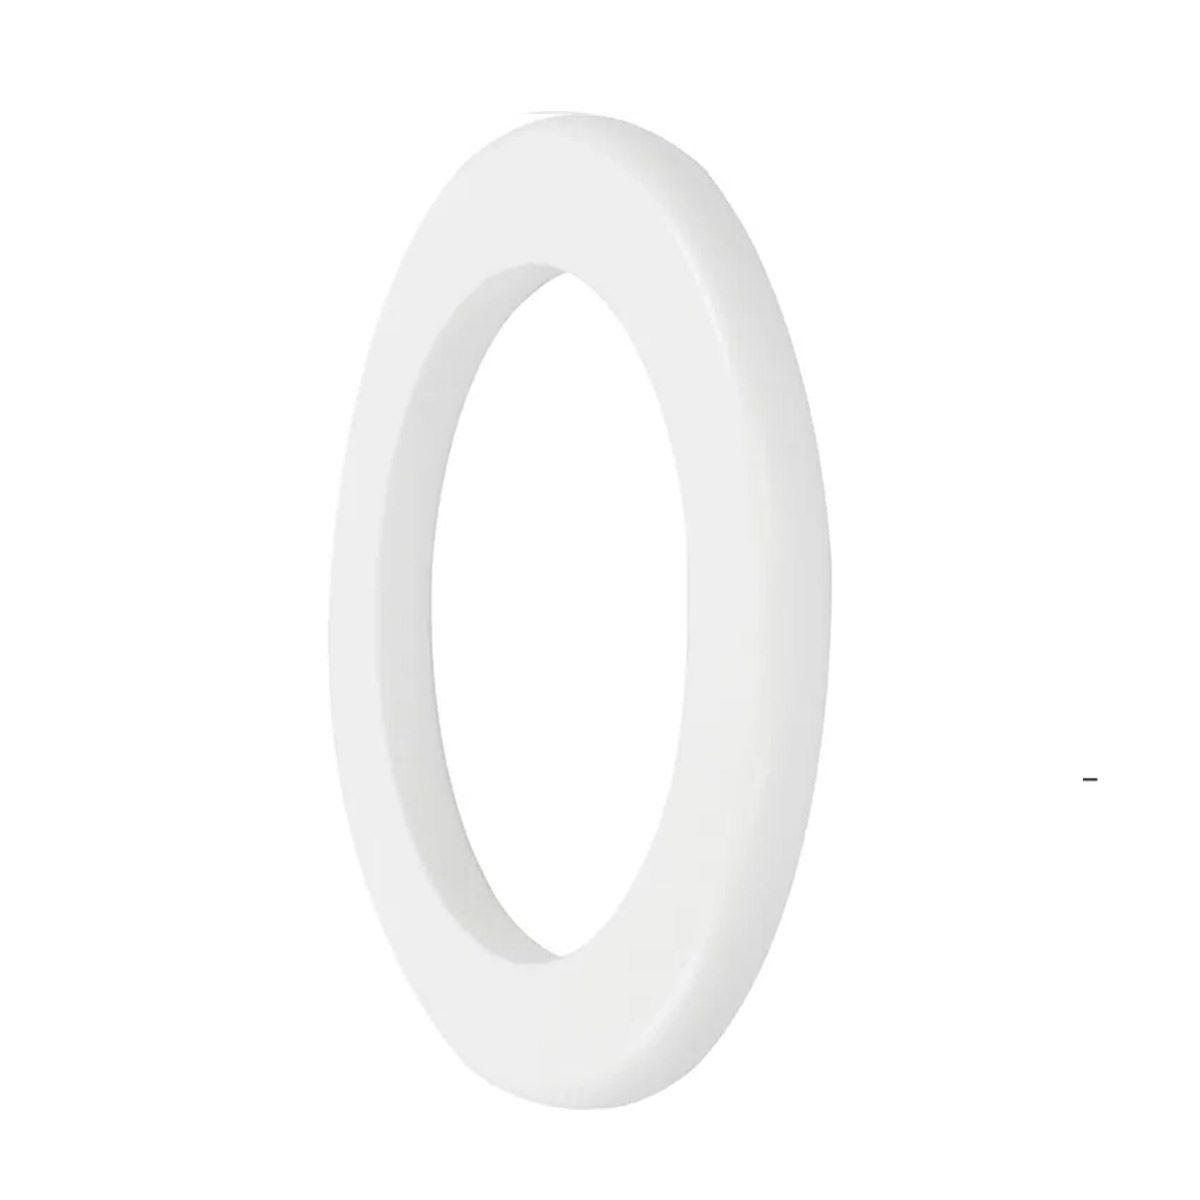 8.8″ SPEAKER TRIM RING – 8.8″ X .5″ THICK – WHITE | TRIMRING8.8x.5